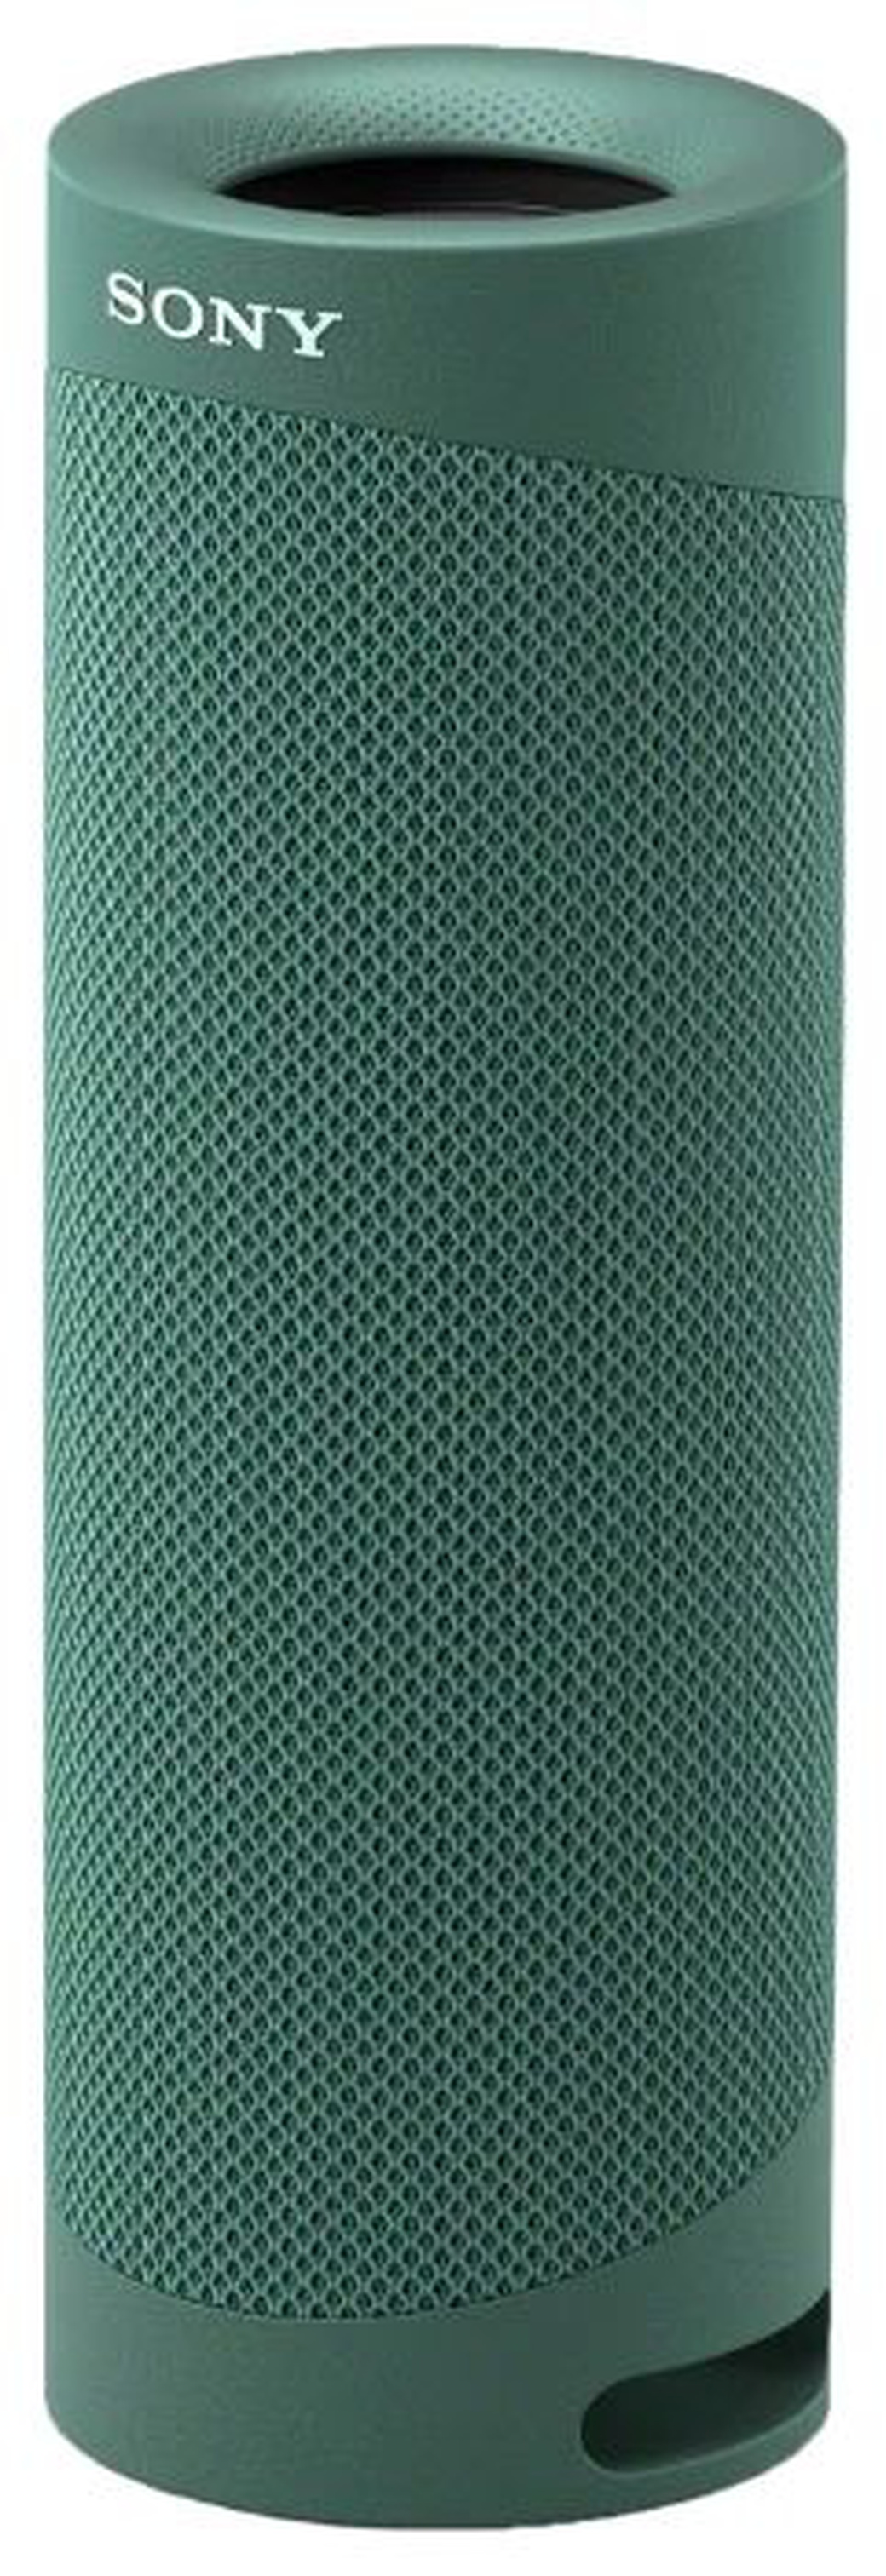 Портативная колонка Sony SRS-XB23, зеленый фото